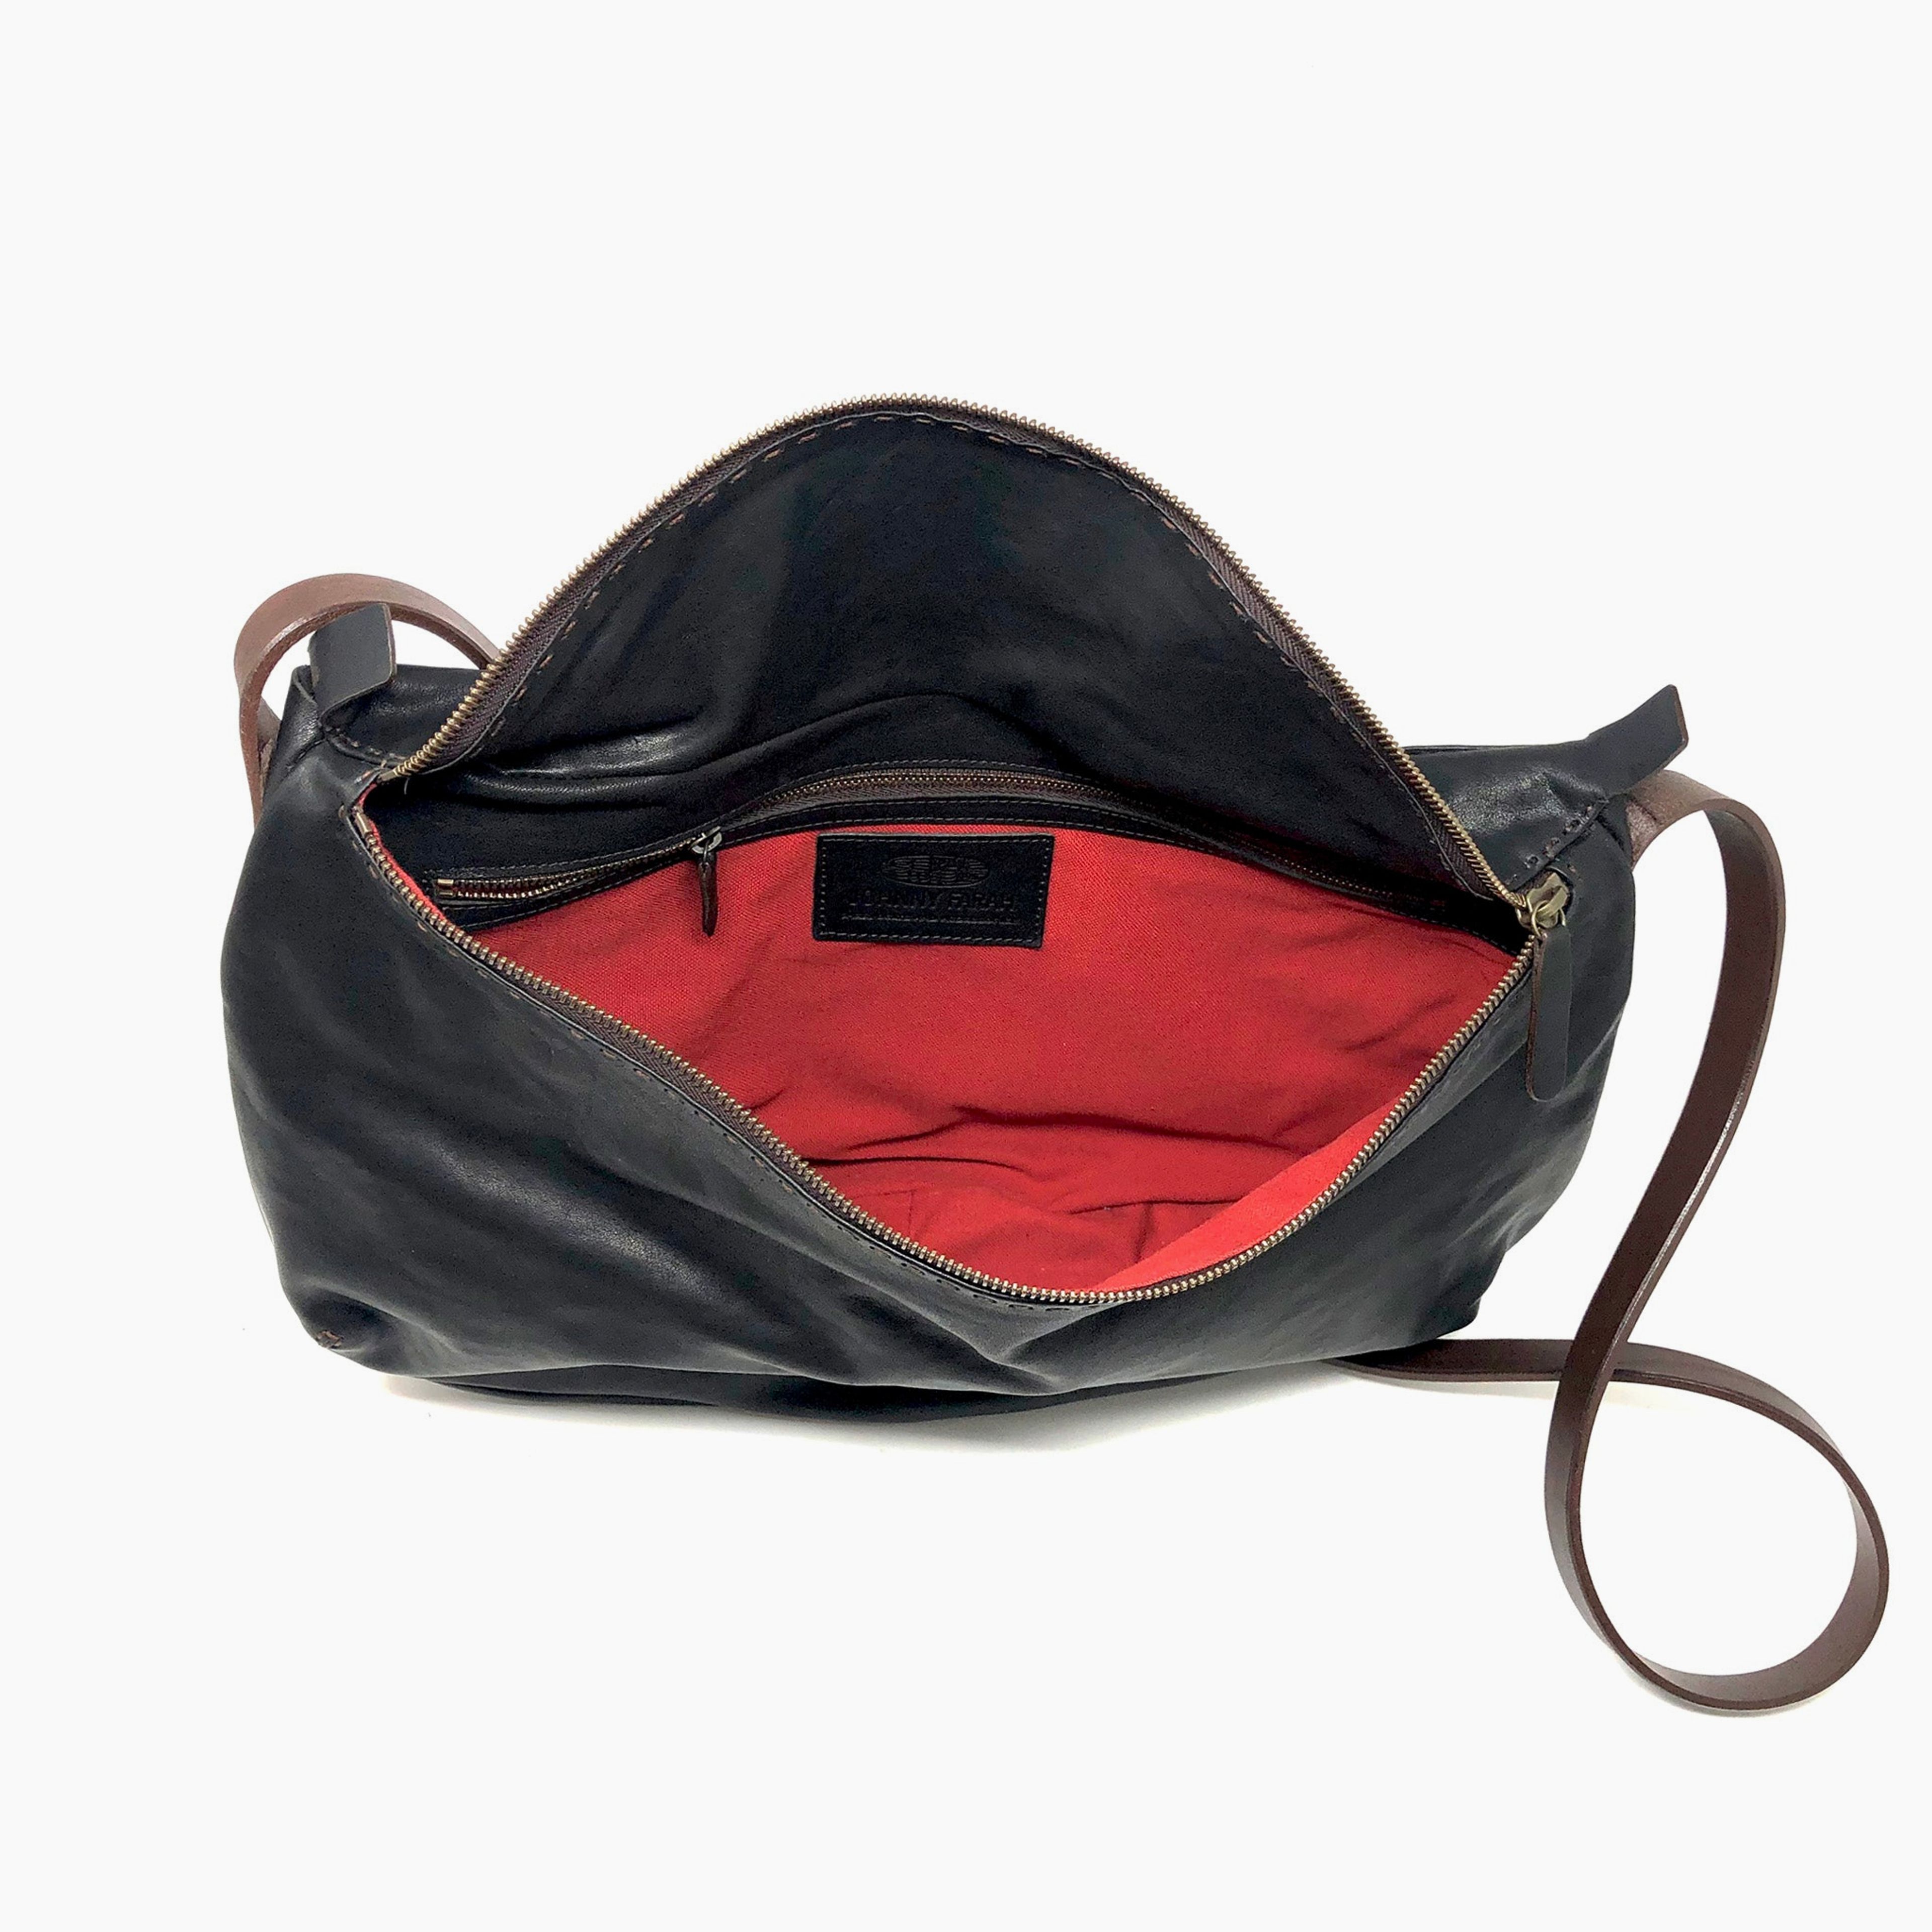 Alba - L Leather Bag